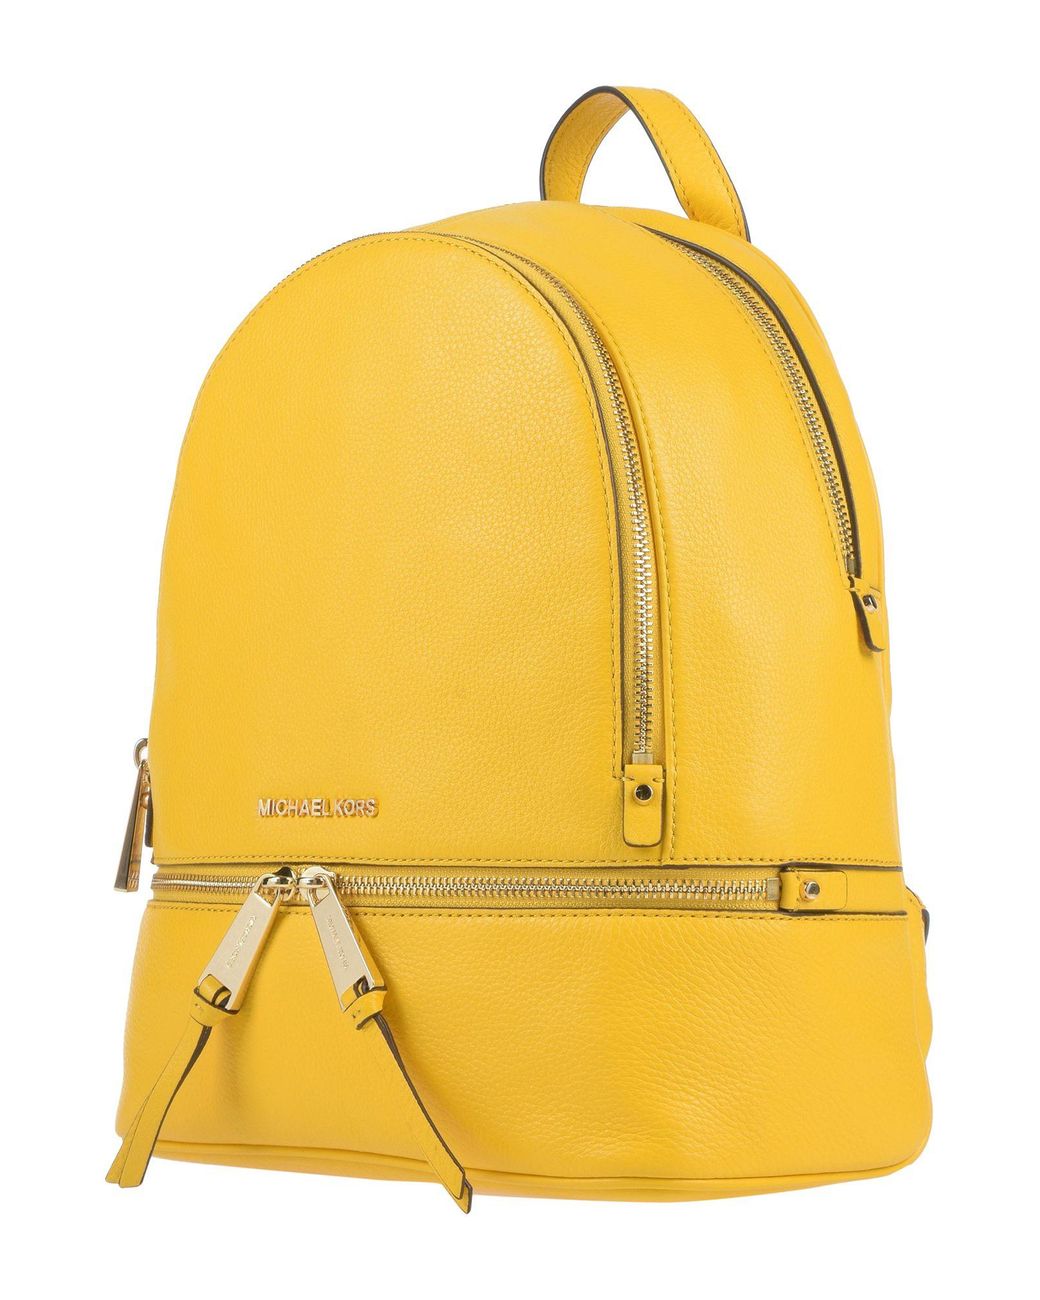 Michael Kors Erin Medium Abbey Backpack Marigold Yellow Pebbled Leather   Walmartcom